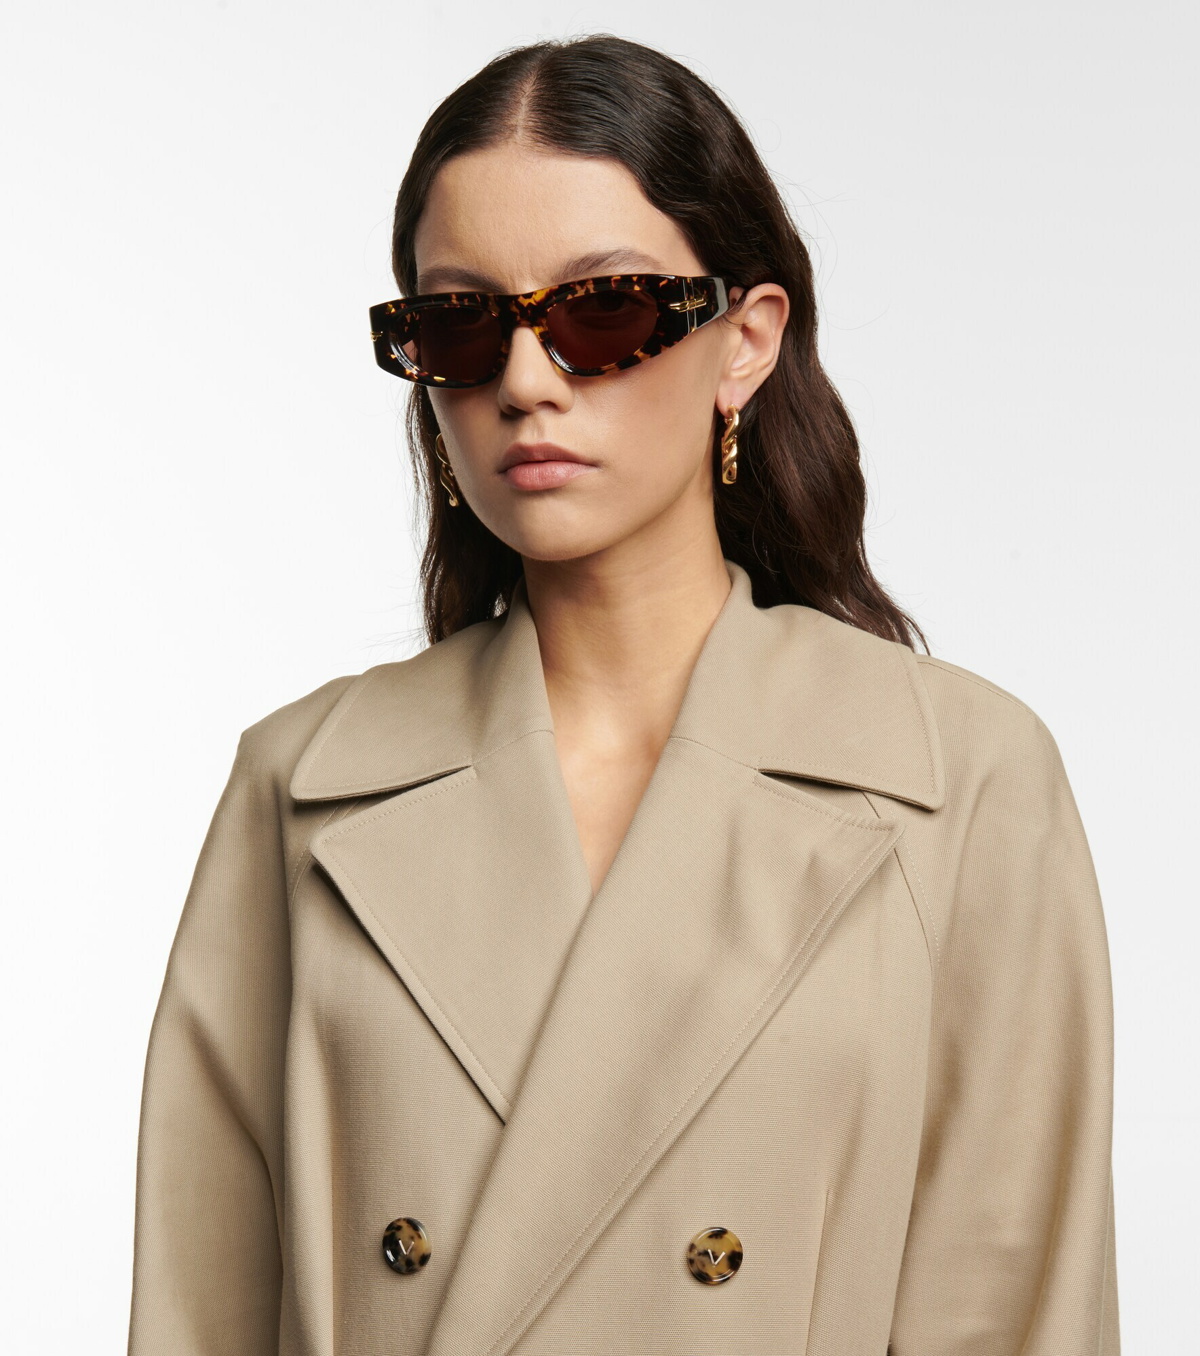 Christian Dior Spirit 2 Cat-Eye Sunglasses - Black Sunglasses, Accessories  - CHR167492 | The RealReal